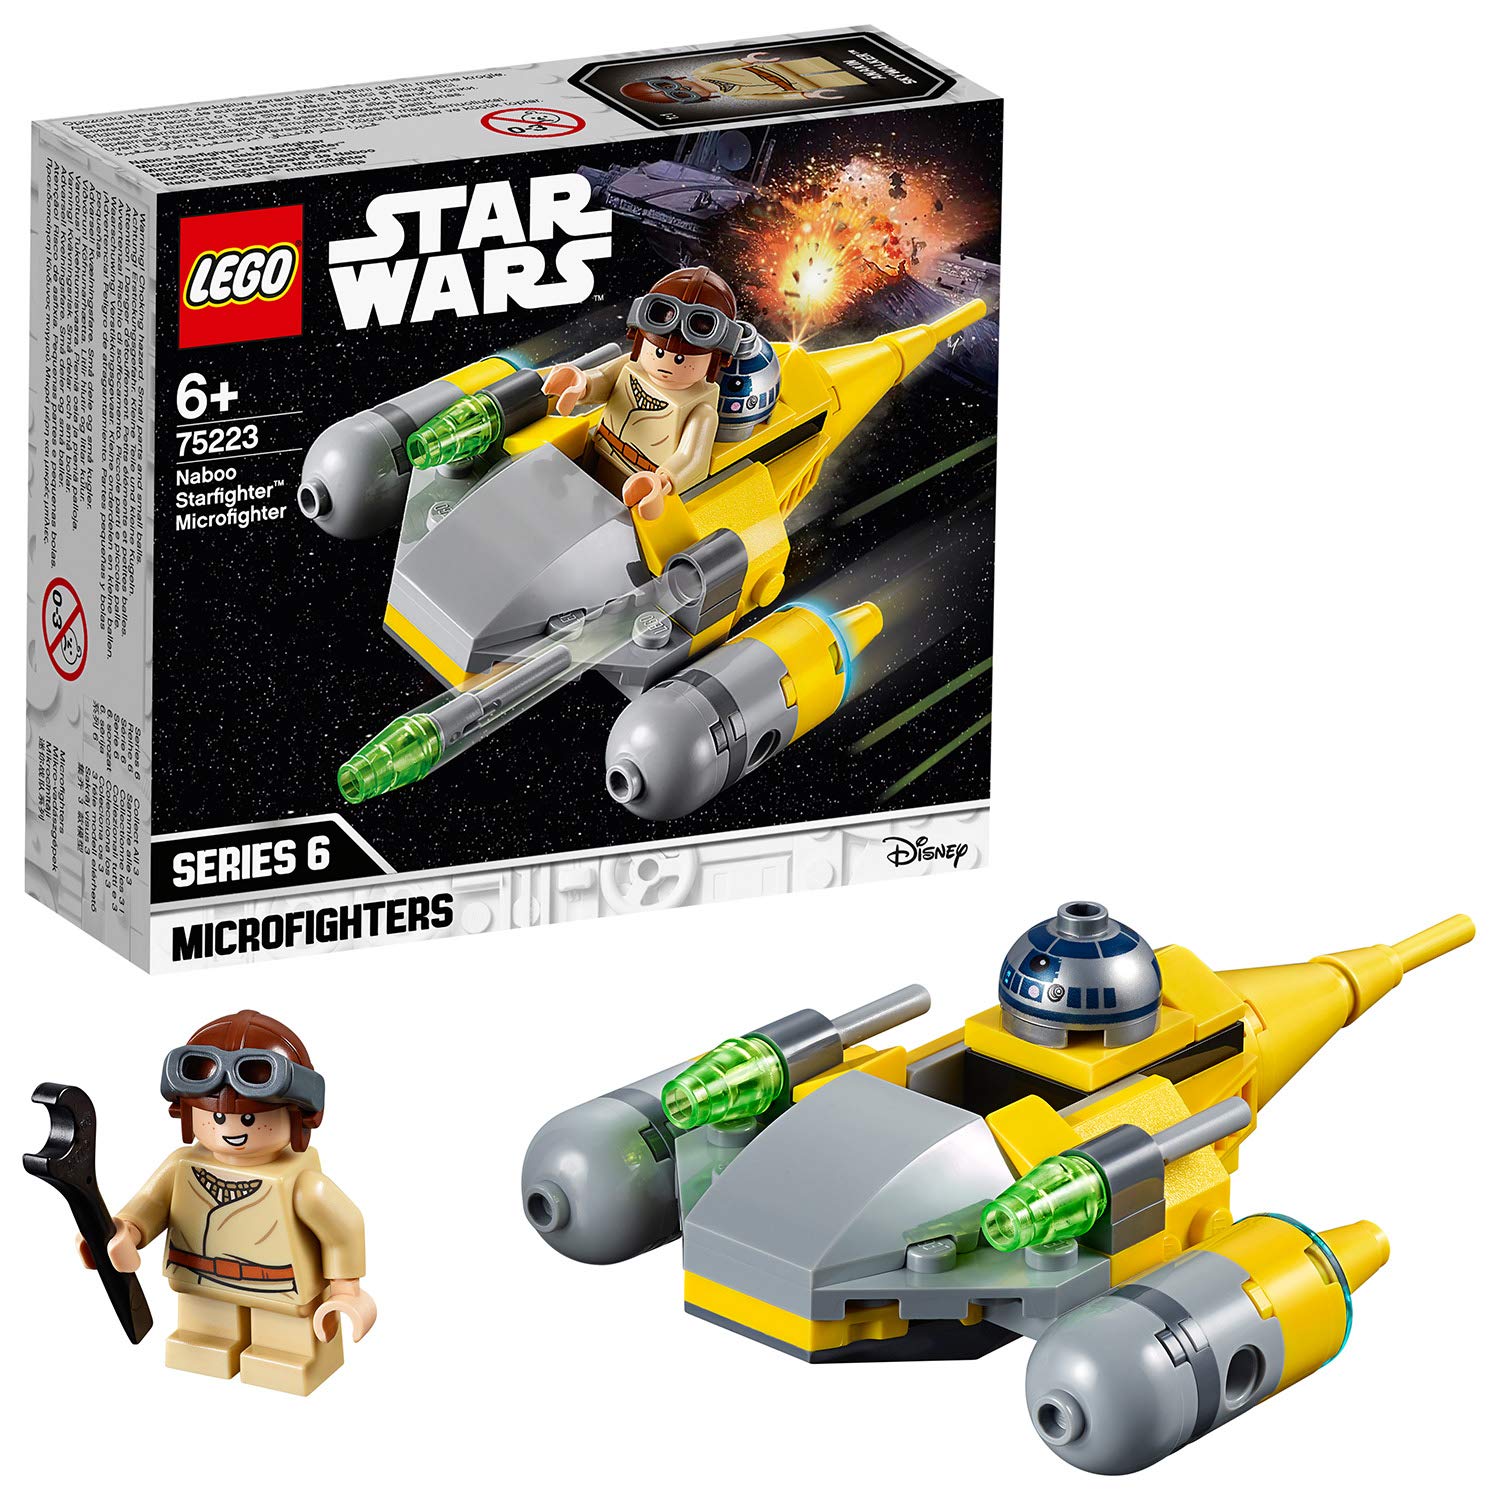 Lego Star Wars 75223 Naboo Starfighter Microfighter